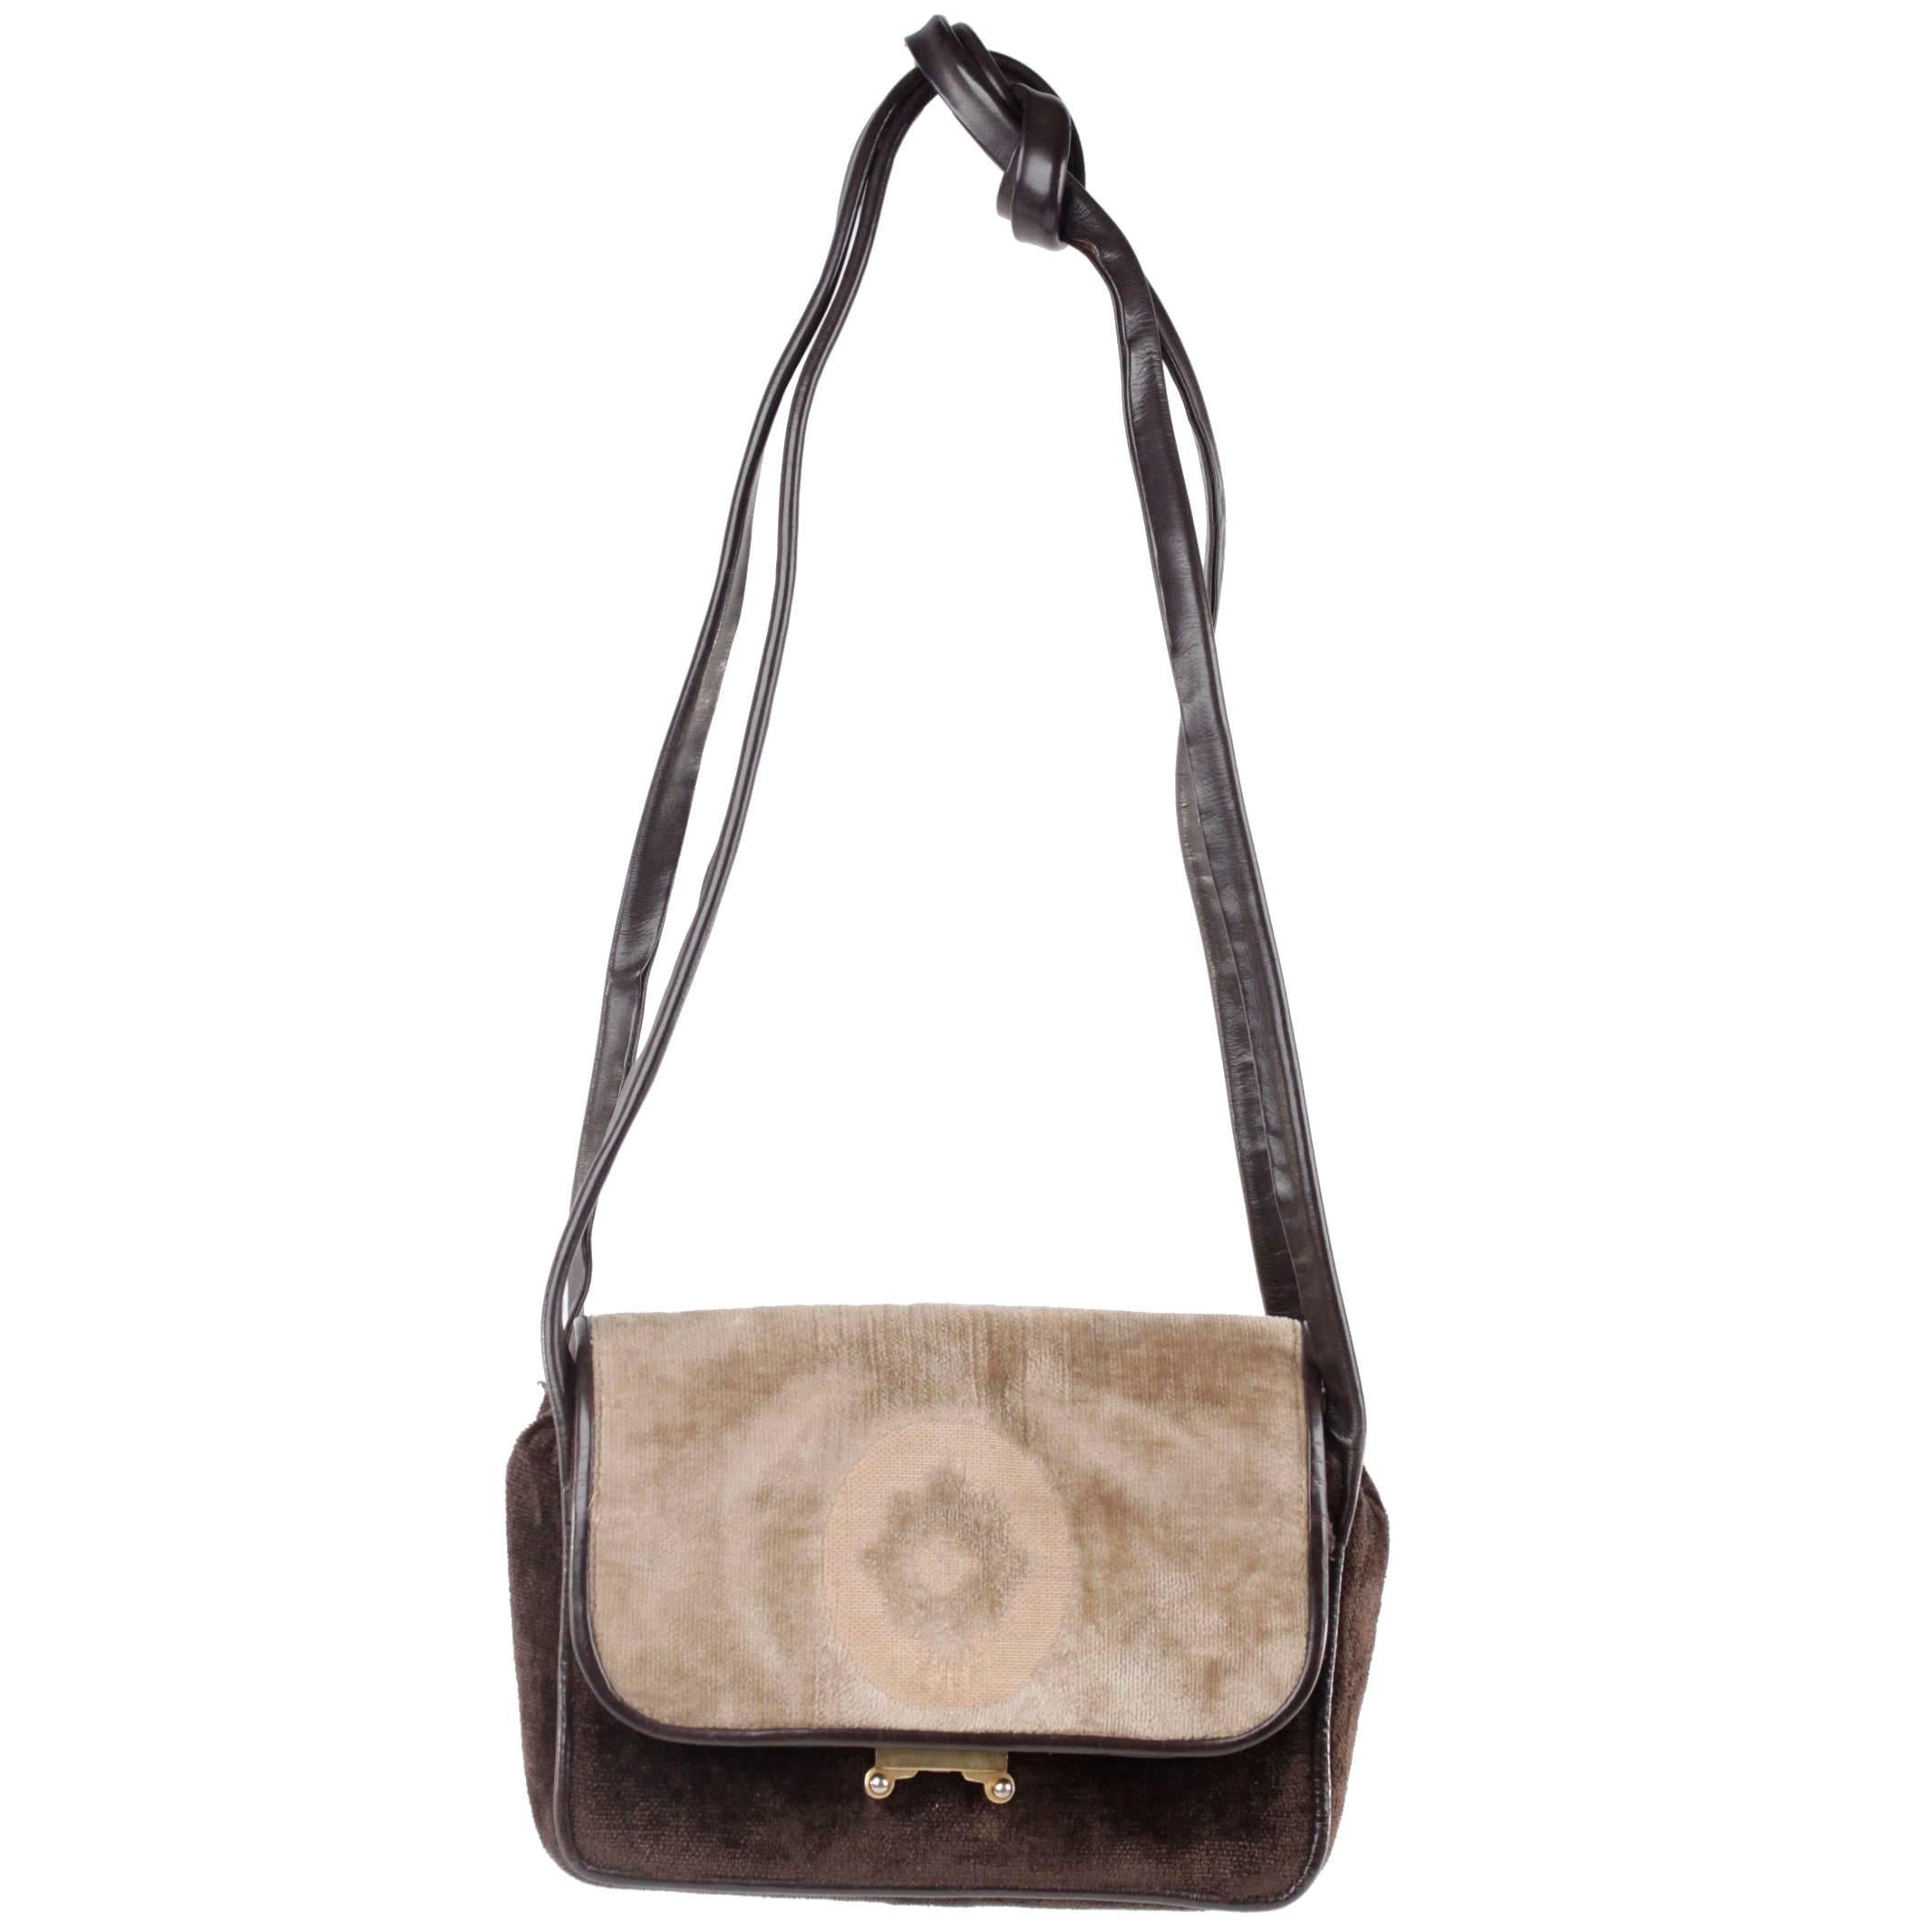 ROBERTA DI CAMERINO VINTAGE Brown & Beige Velvet SHOULDER BAG Handbag